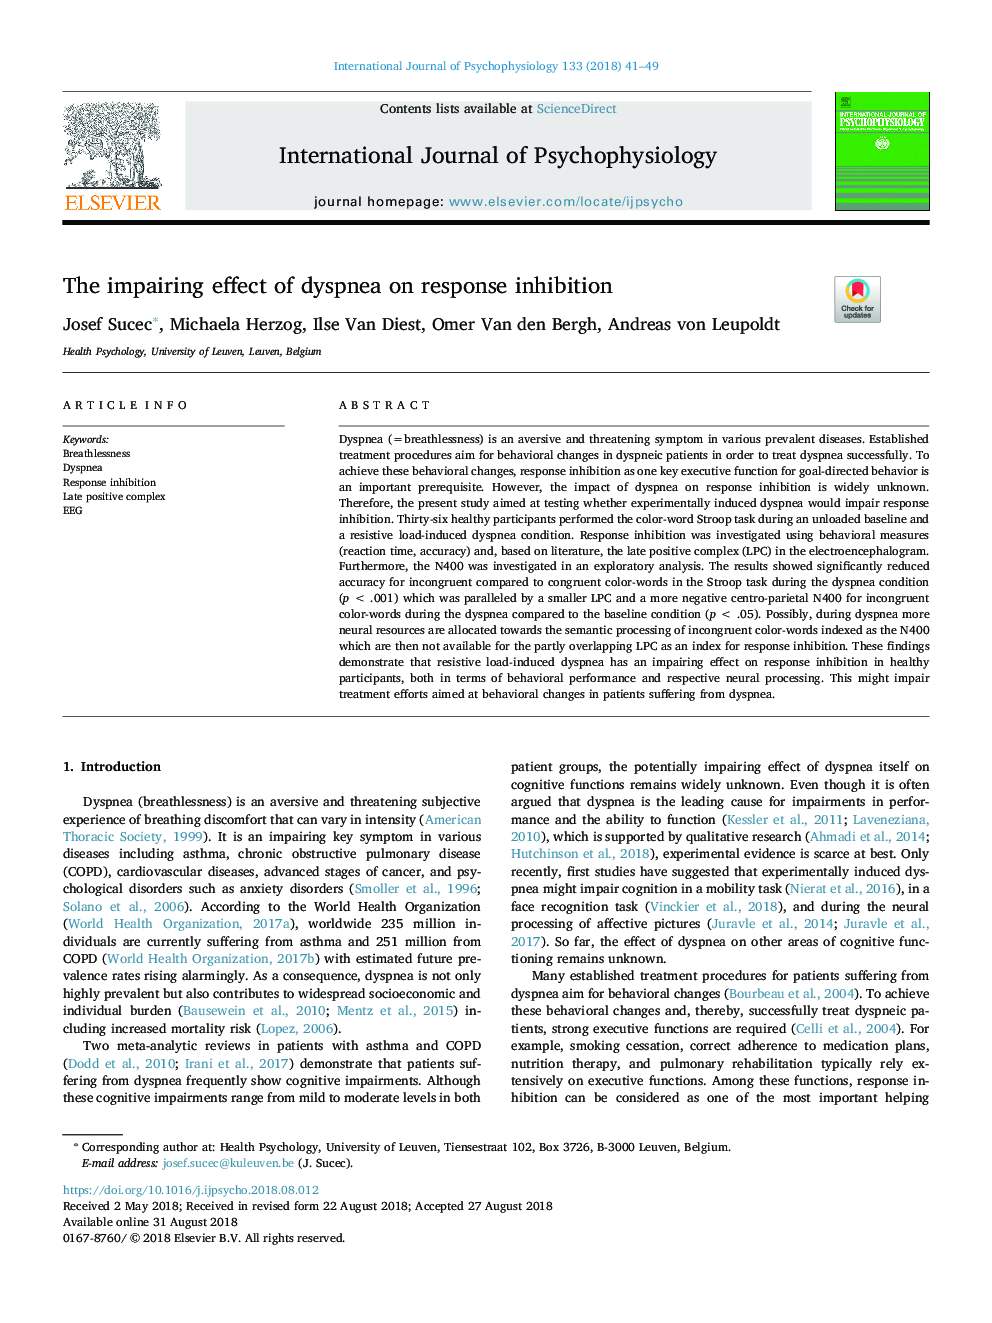 The impairing effect of dyspnea on response inhibition